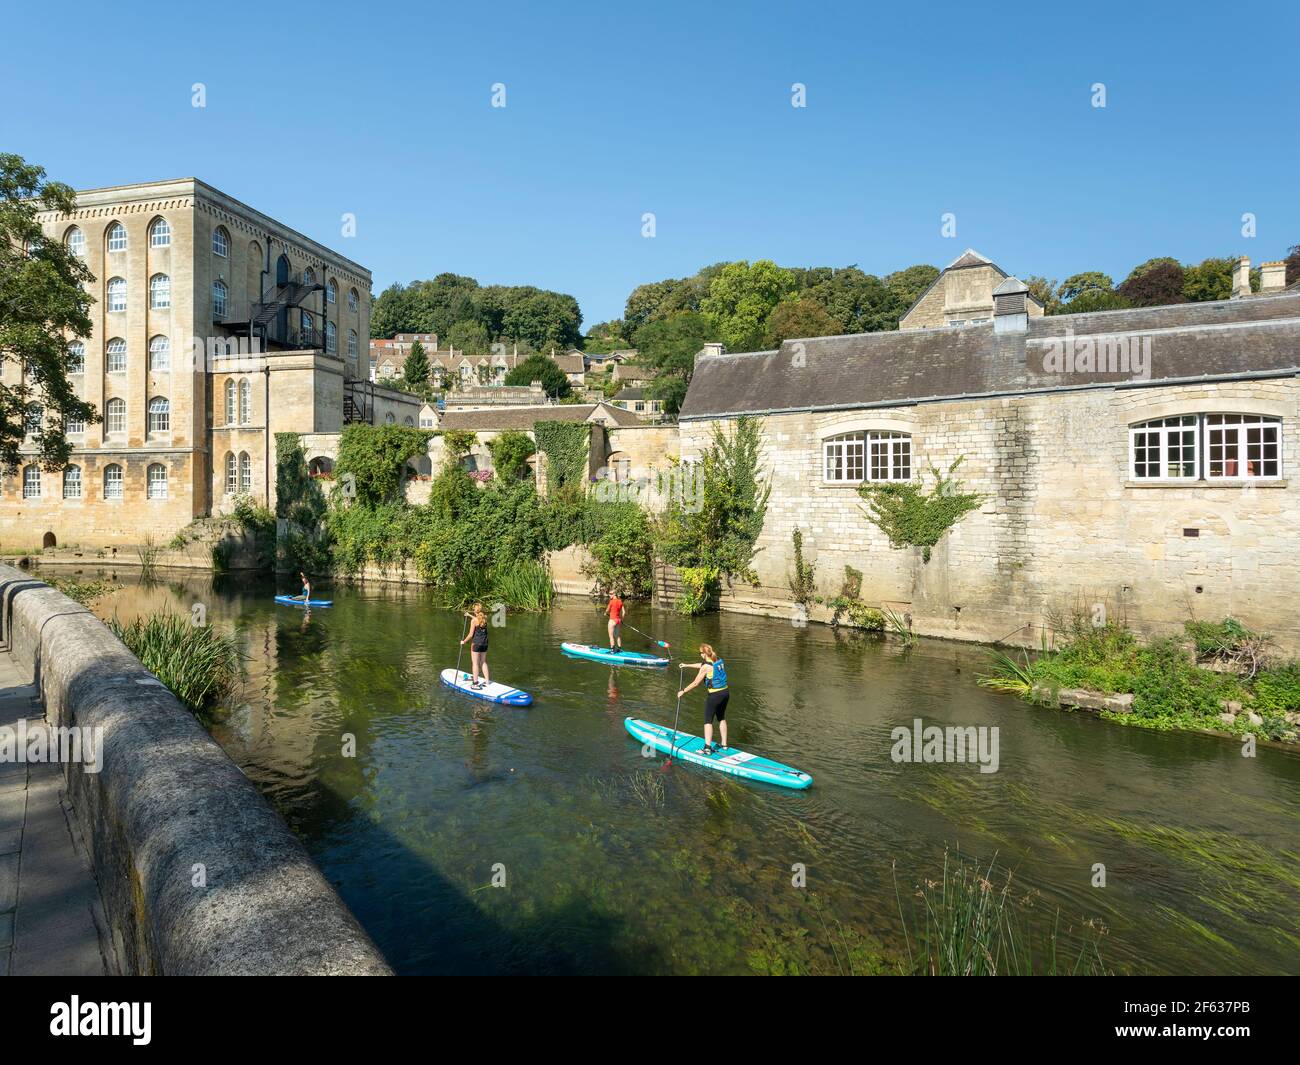 River Avon at Bradford on Avon, Cotswolds, Wiltshire, England, UK, Europe Stock Photo